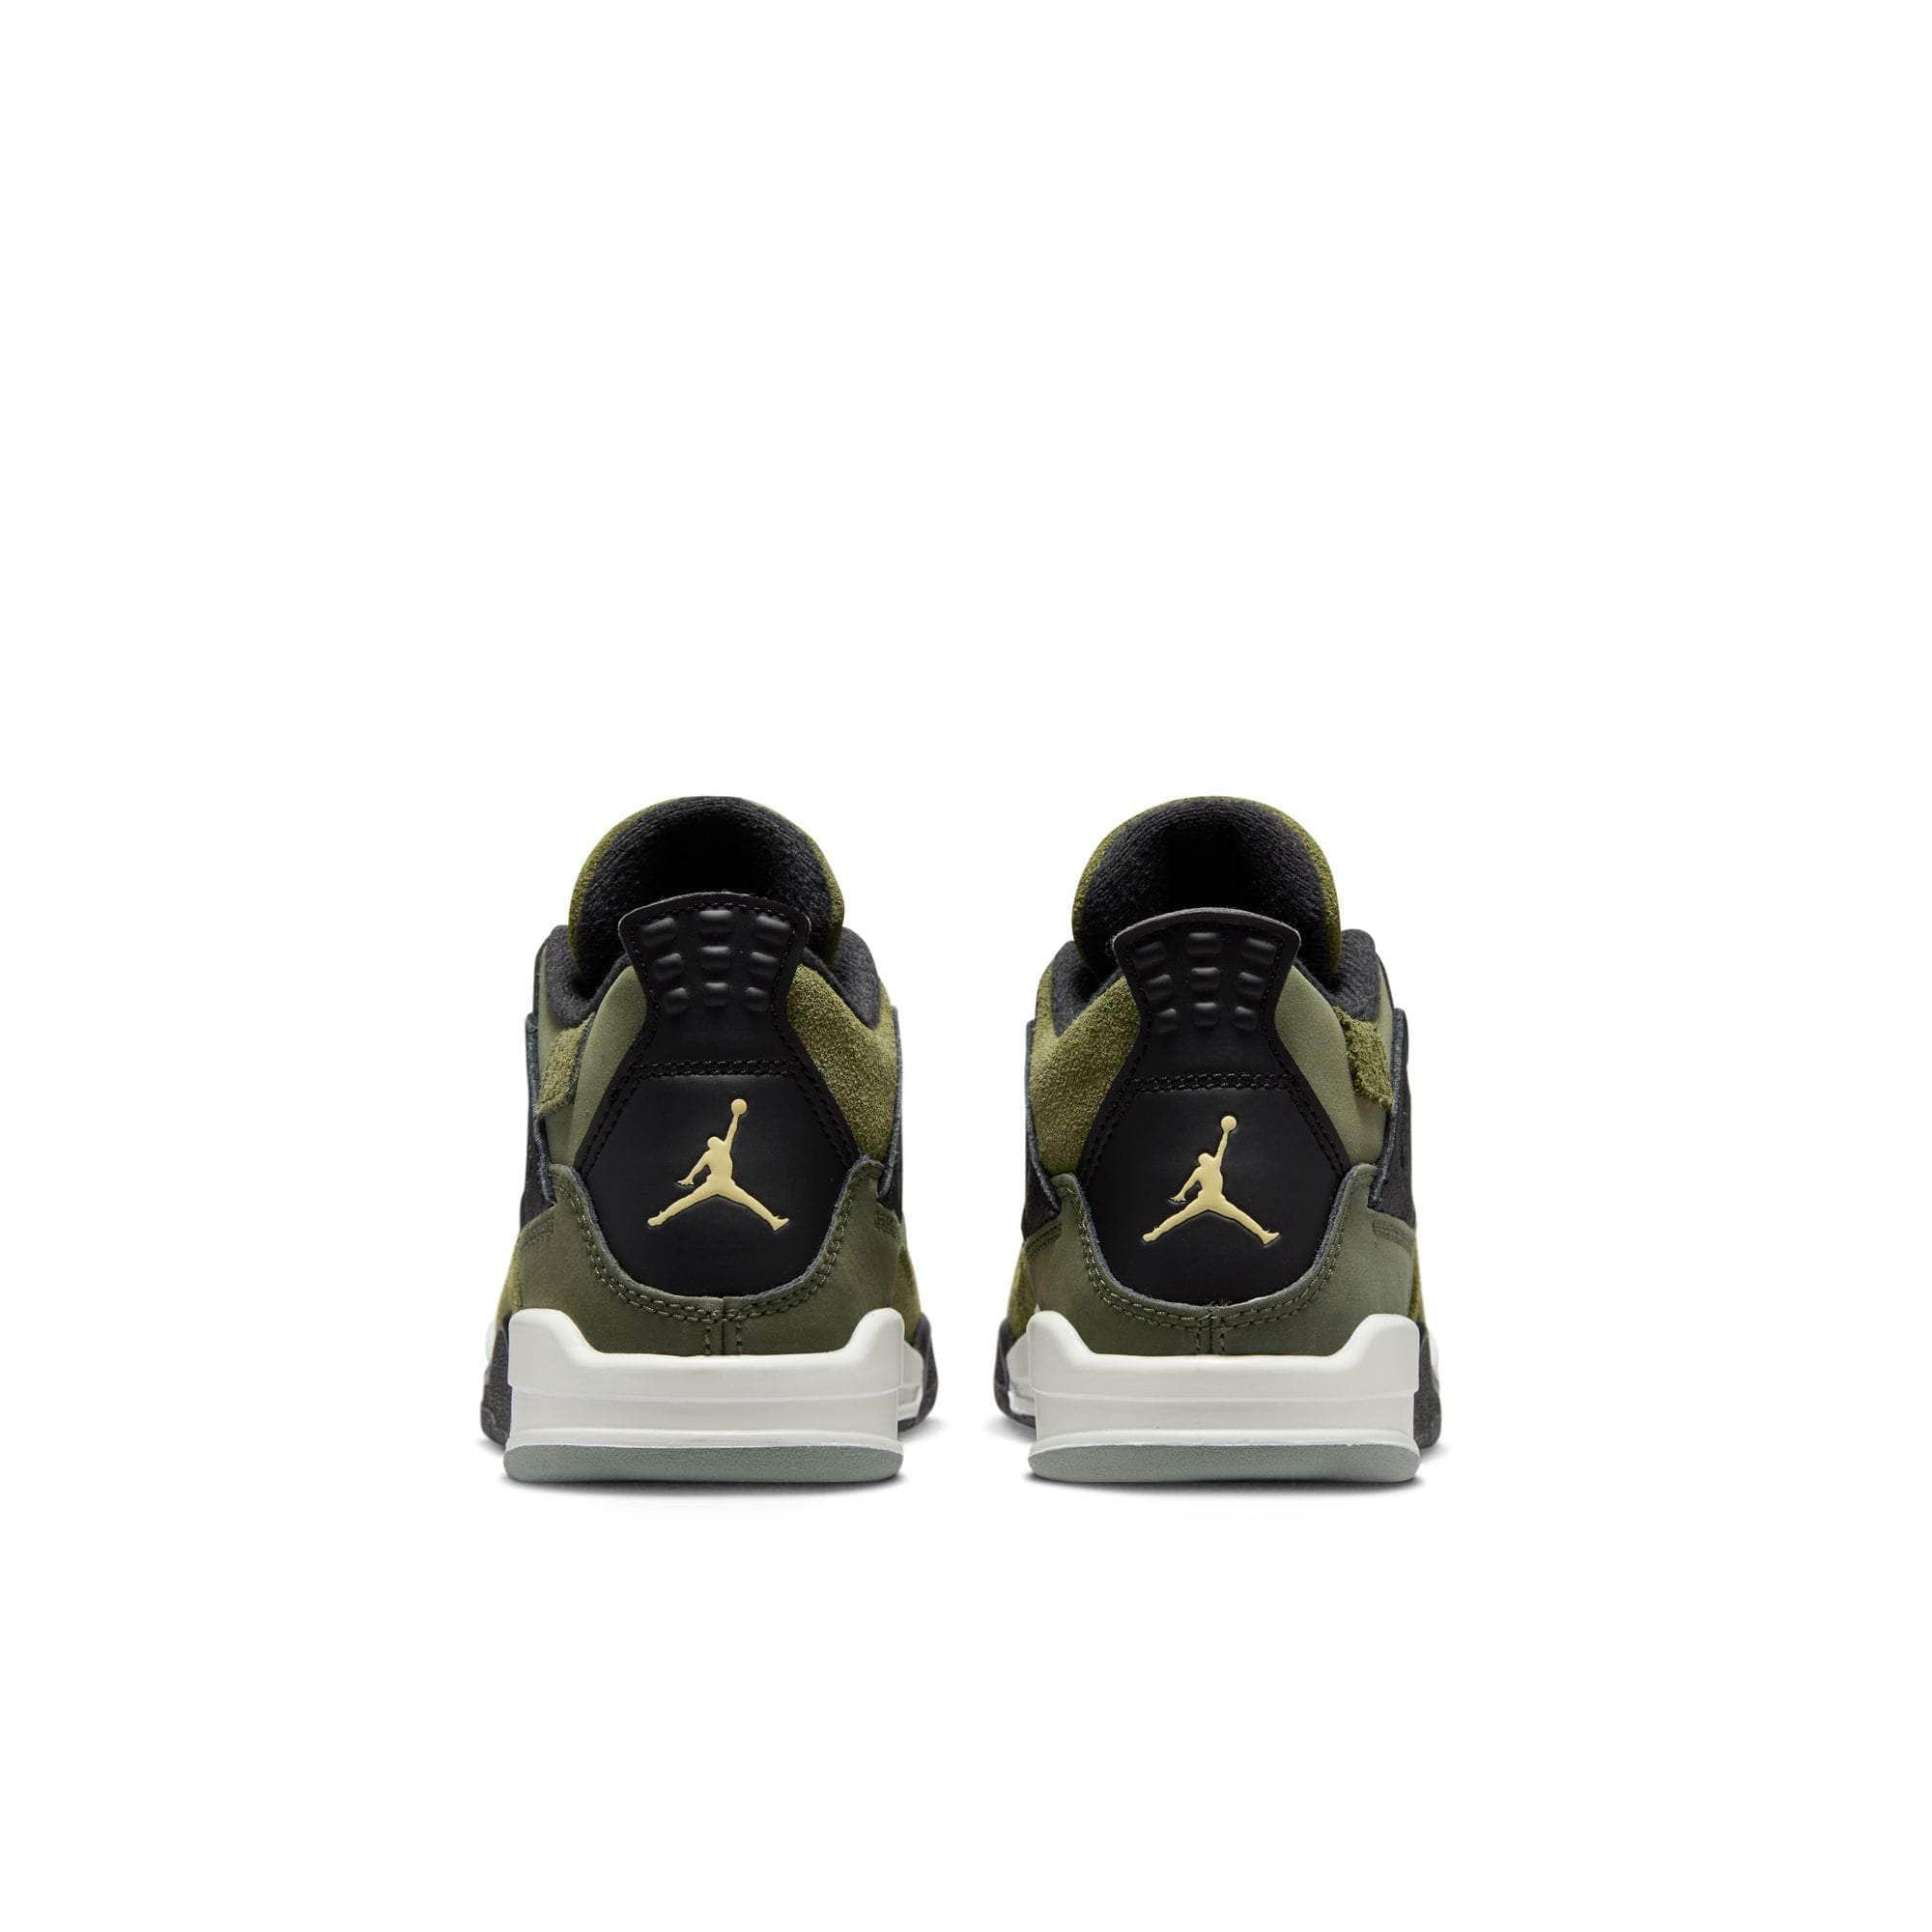 Coming Soon: The Nike Air Jordan 4 Retro SE Craft Medium Olive